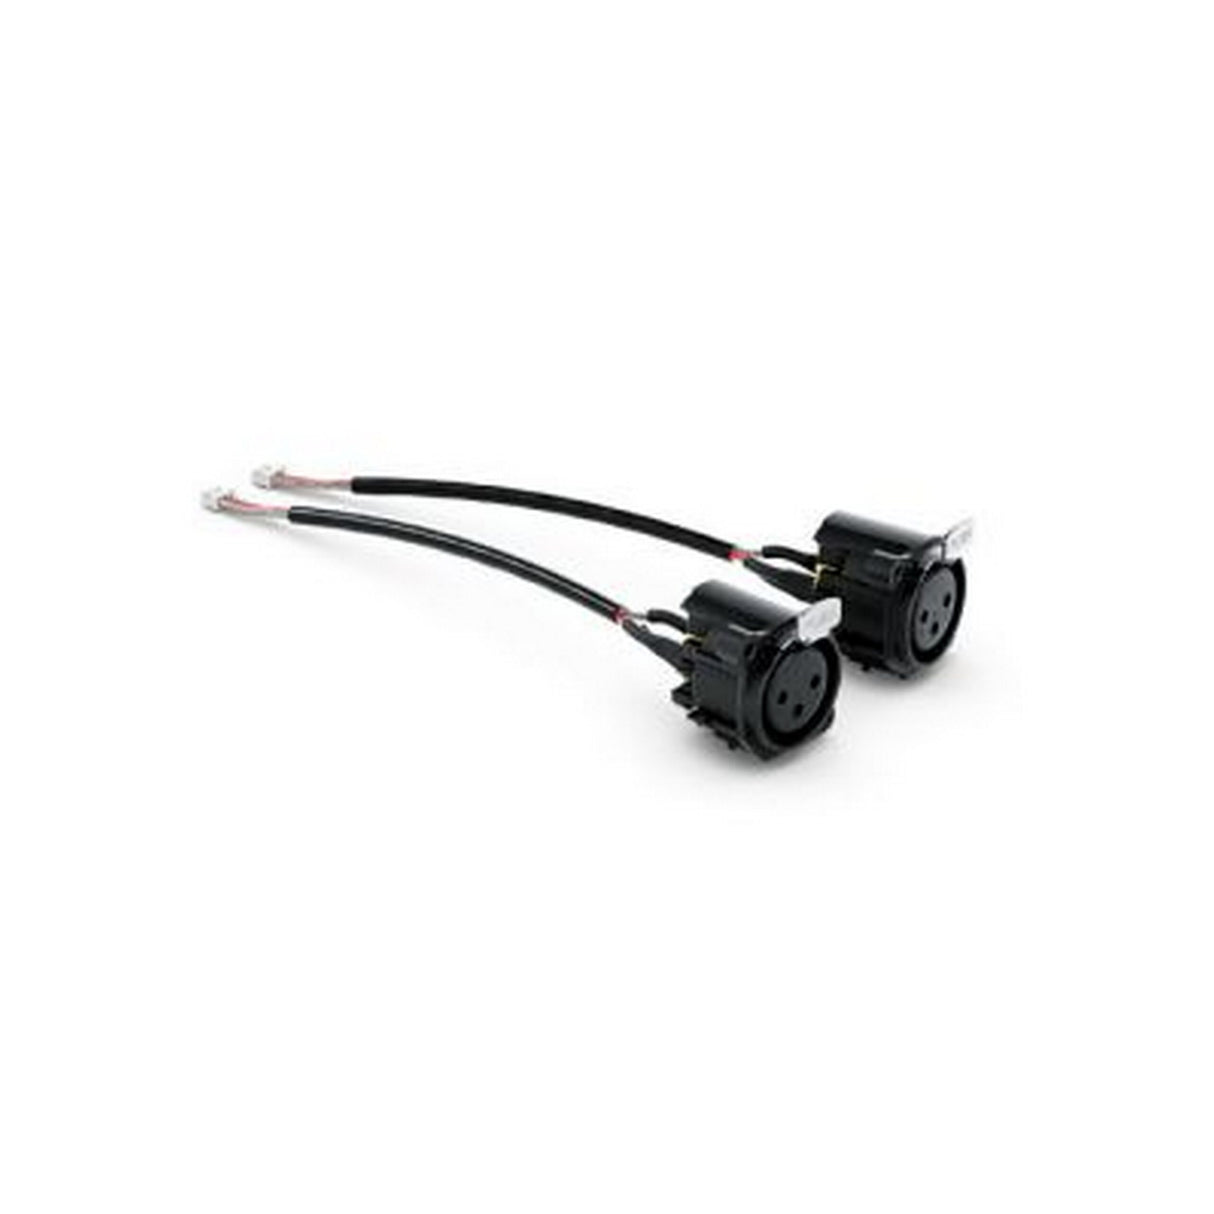 Blackmagic Design Camera URSA Mini XLR Input Cable